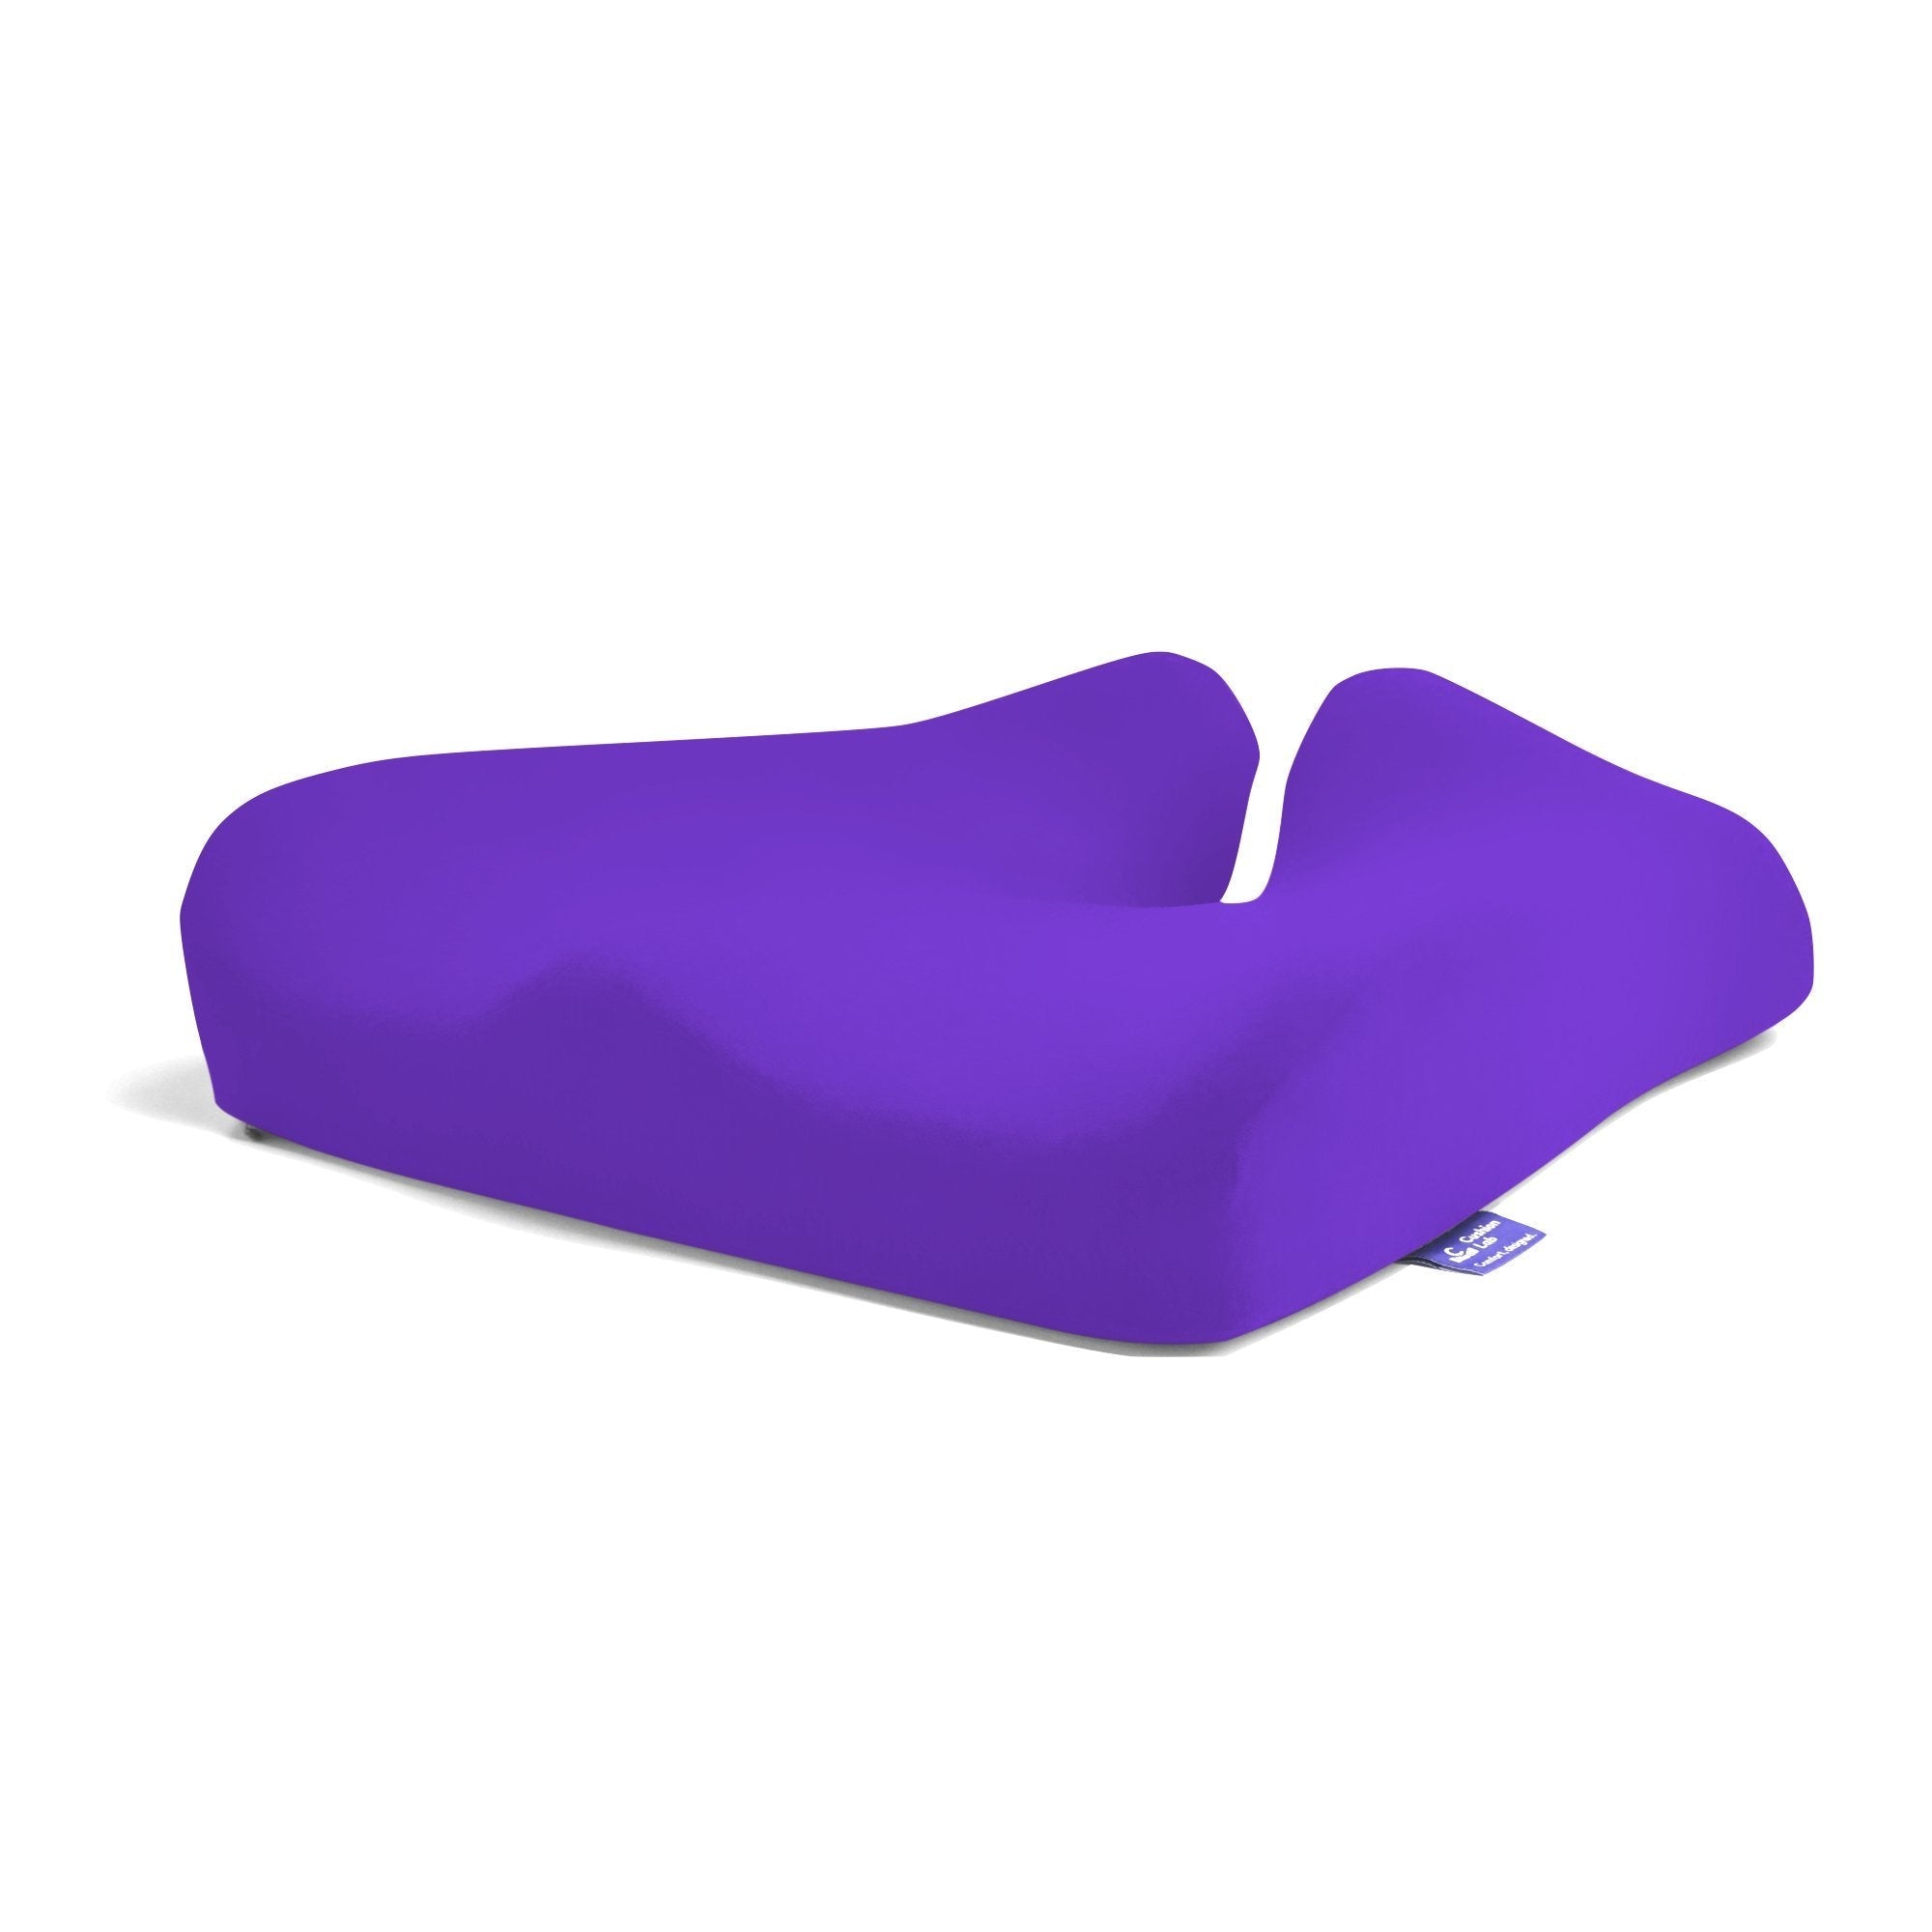 Cushion Lab Pressure Relief Seat Cushion - Purple - Standard